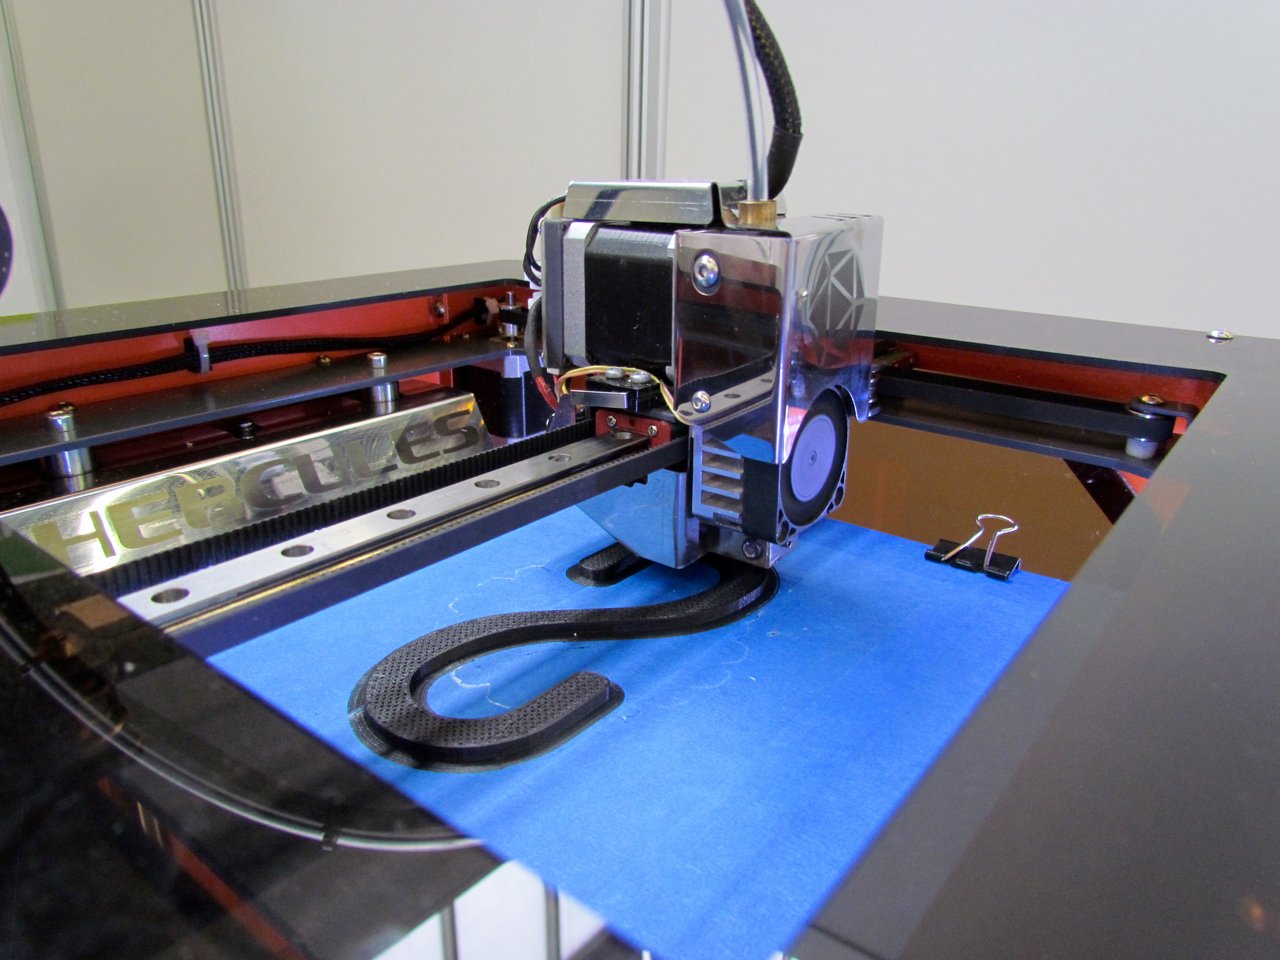  Inside the Hercules 3D printer from Imprinta 